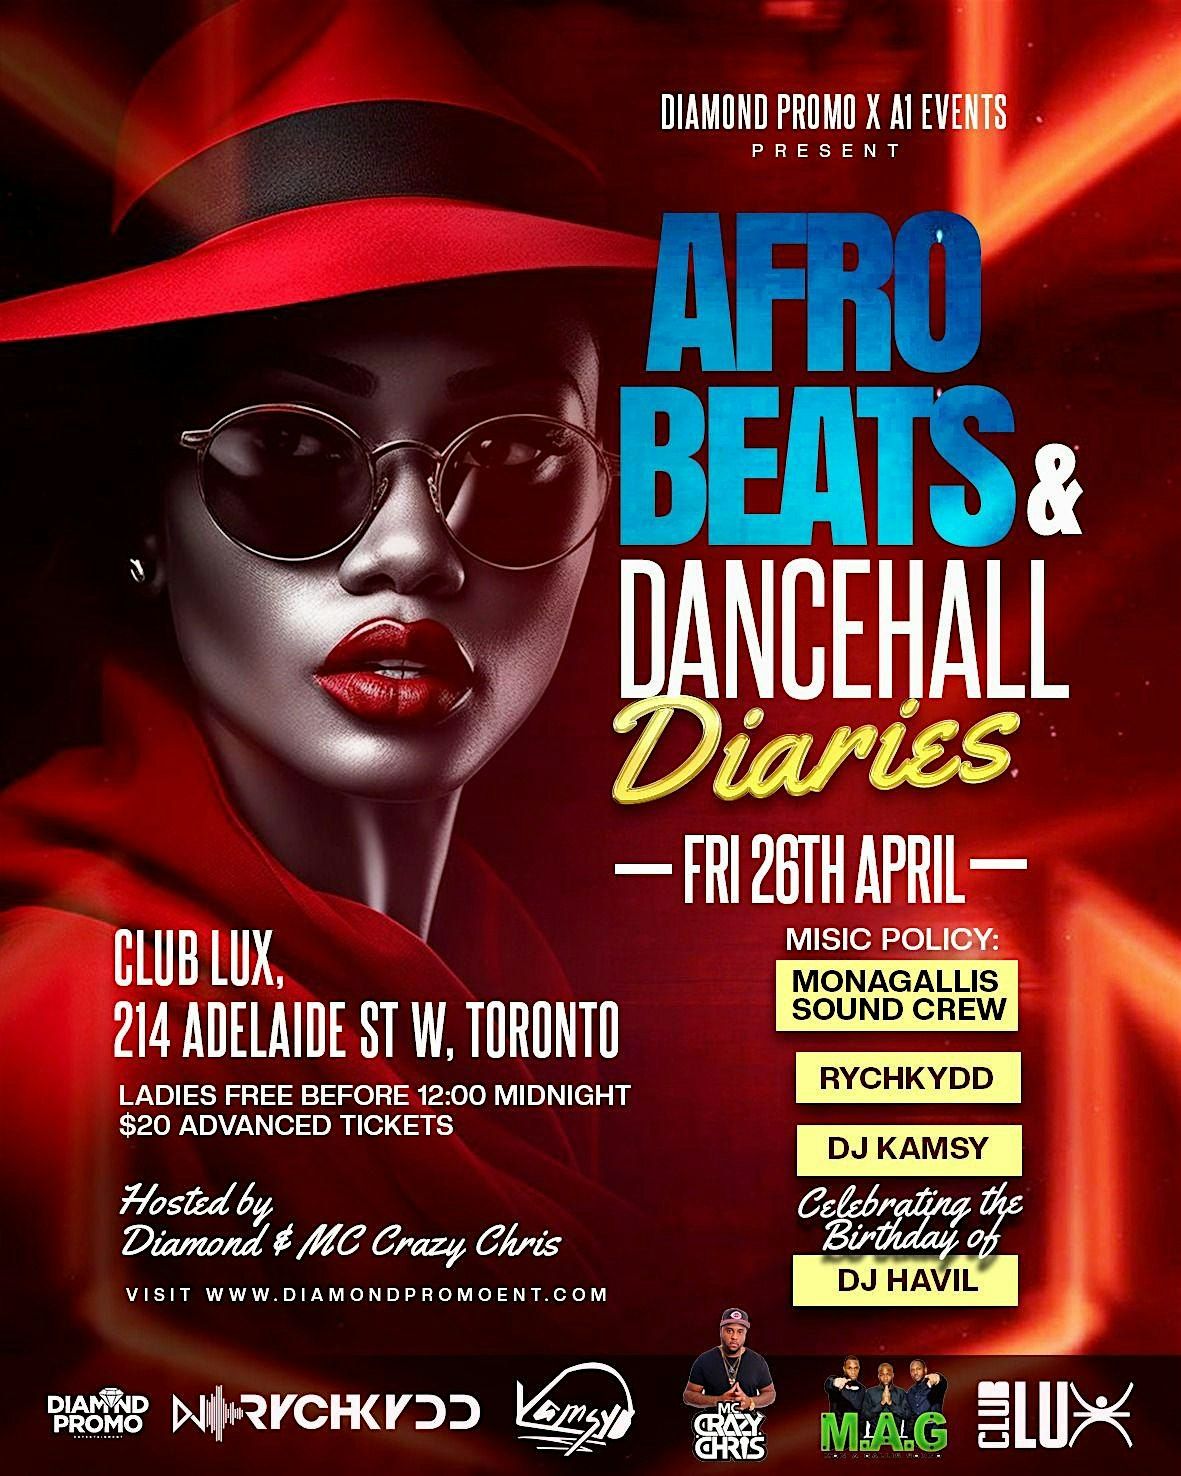 Afrobeats and Dancehall Diaries